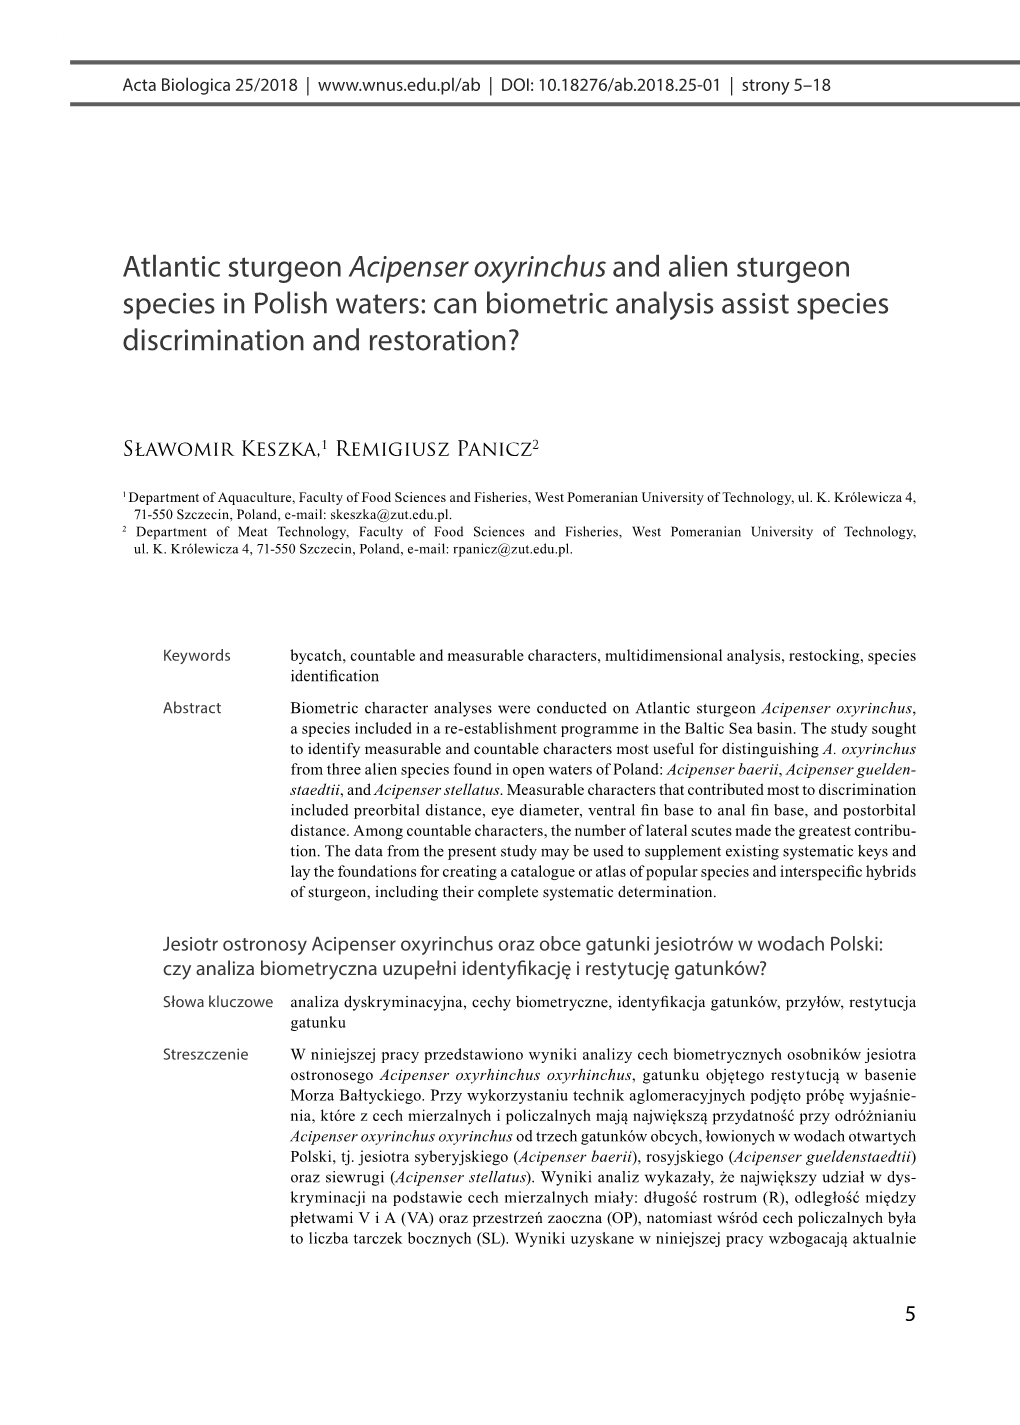 Atlantic Sturgeon Acipenser Oxyrinchus and Alien Sturgeon Species in Polish Waters: Can Biometric Analysis Assist Species Discrimination and Restoration?